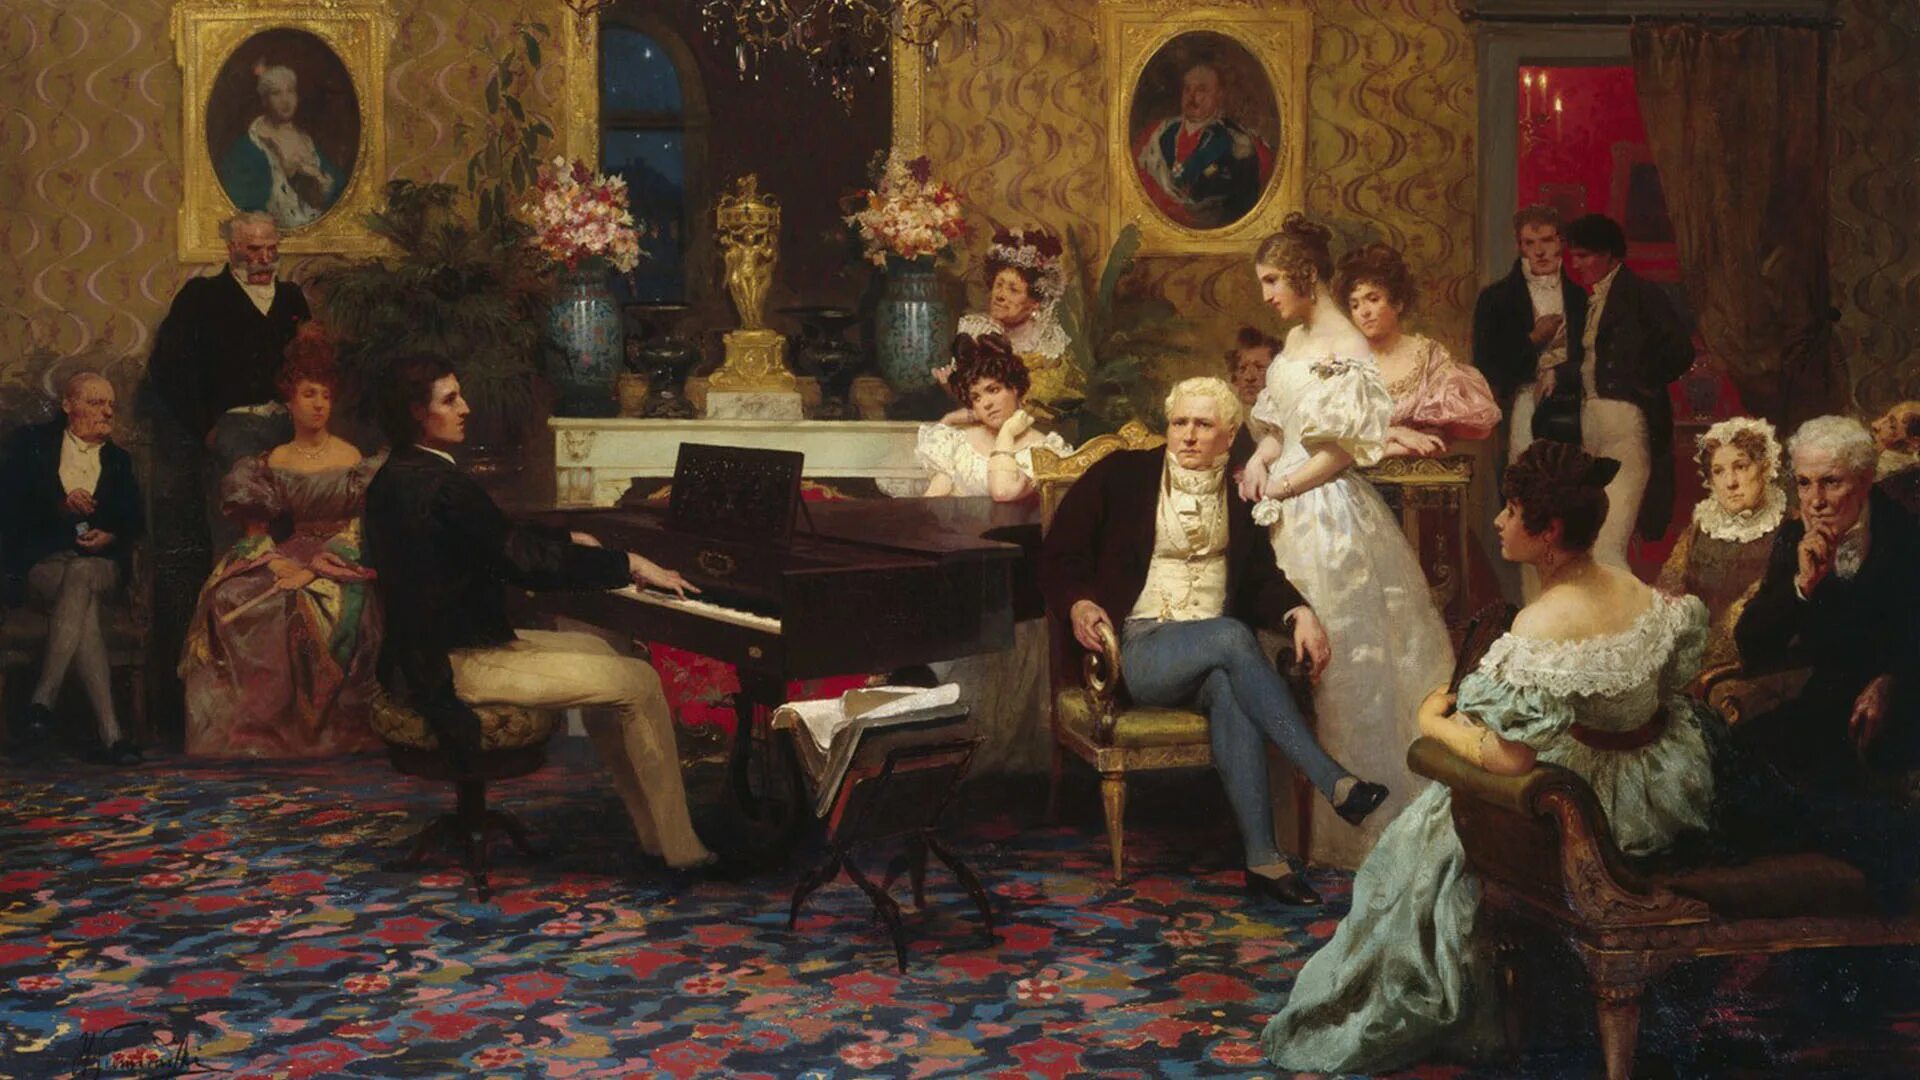 Музыка 19 века слушать. Шопен 1829. Г семирадский Шопен играющий на фортепиано в салоне князя Радзивилла. Шопен 19 век.